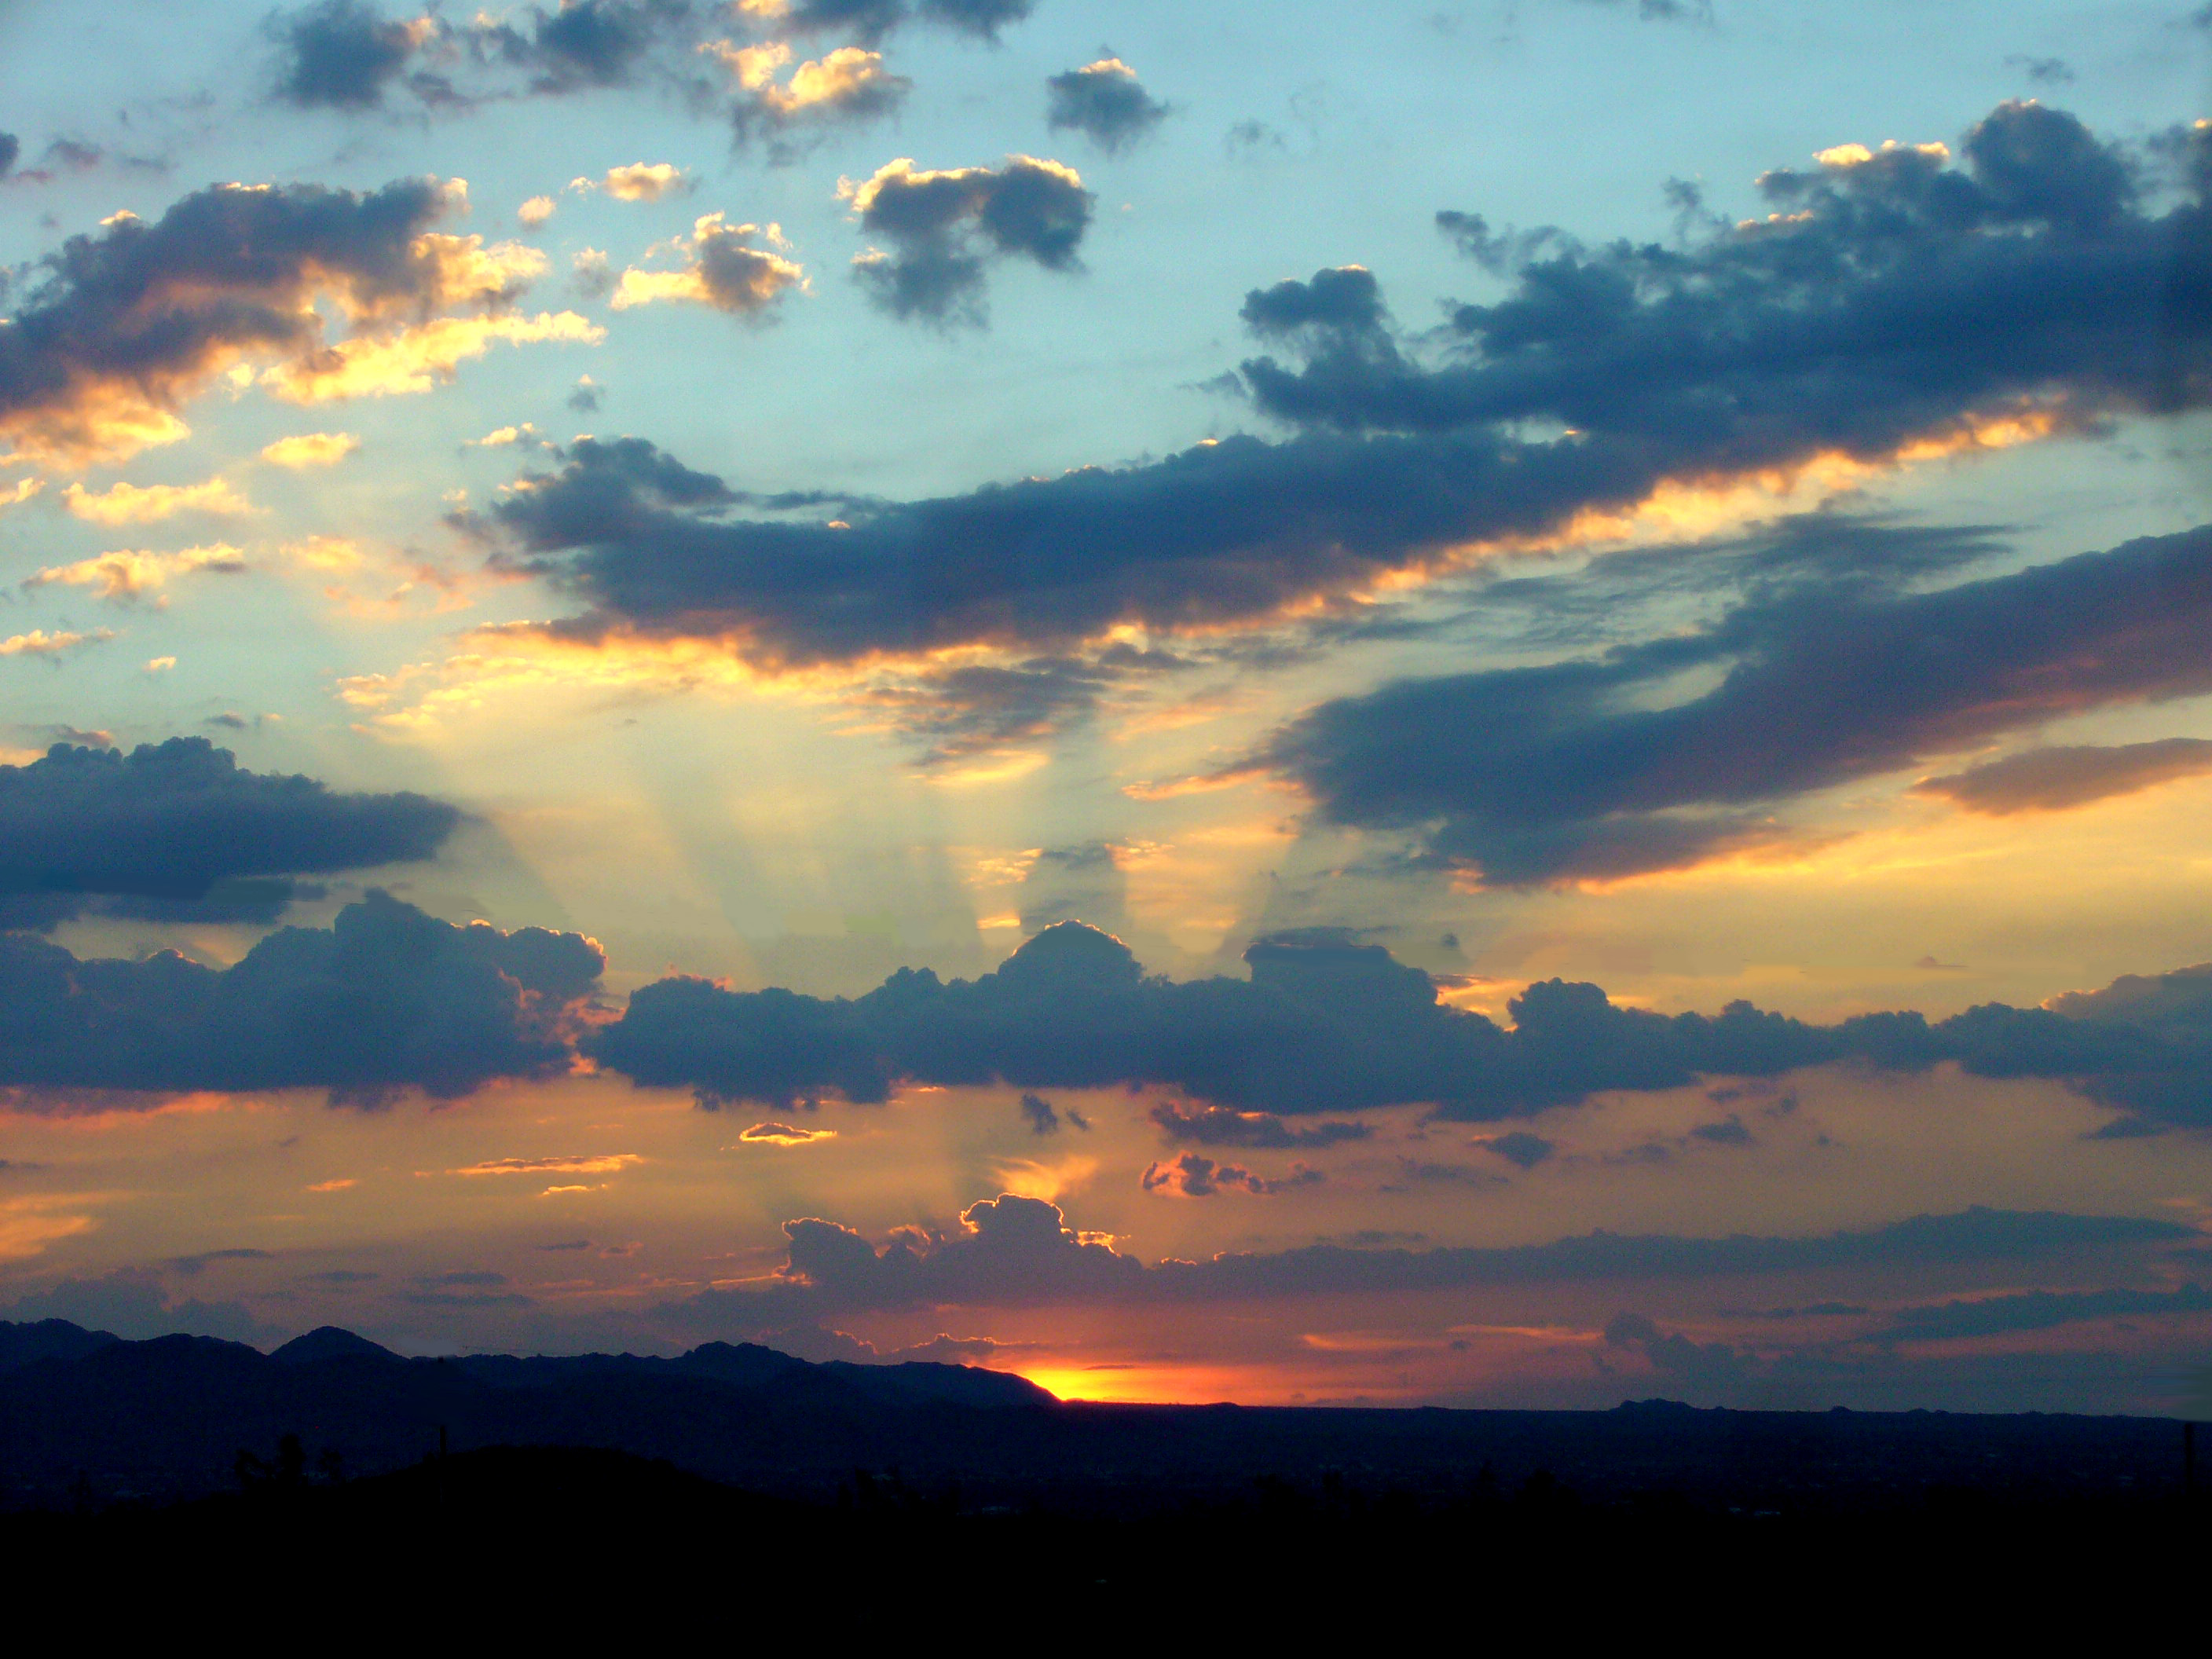 File:Burning Yellow Sunset.jpg - Wikimedia Commons